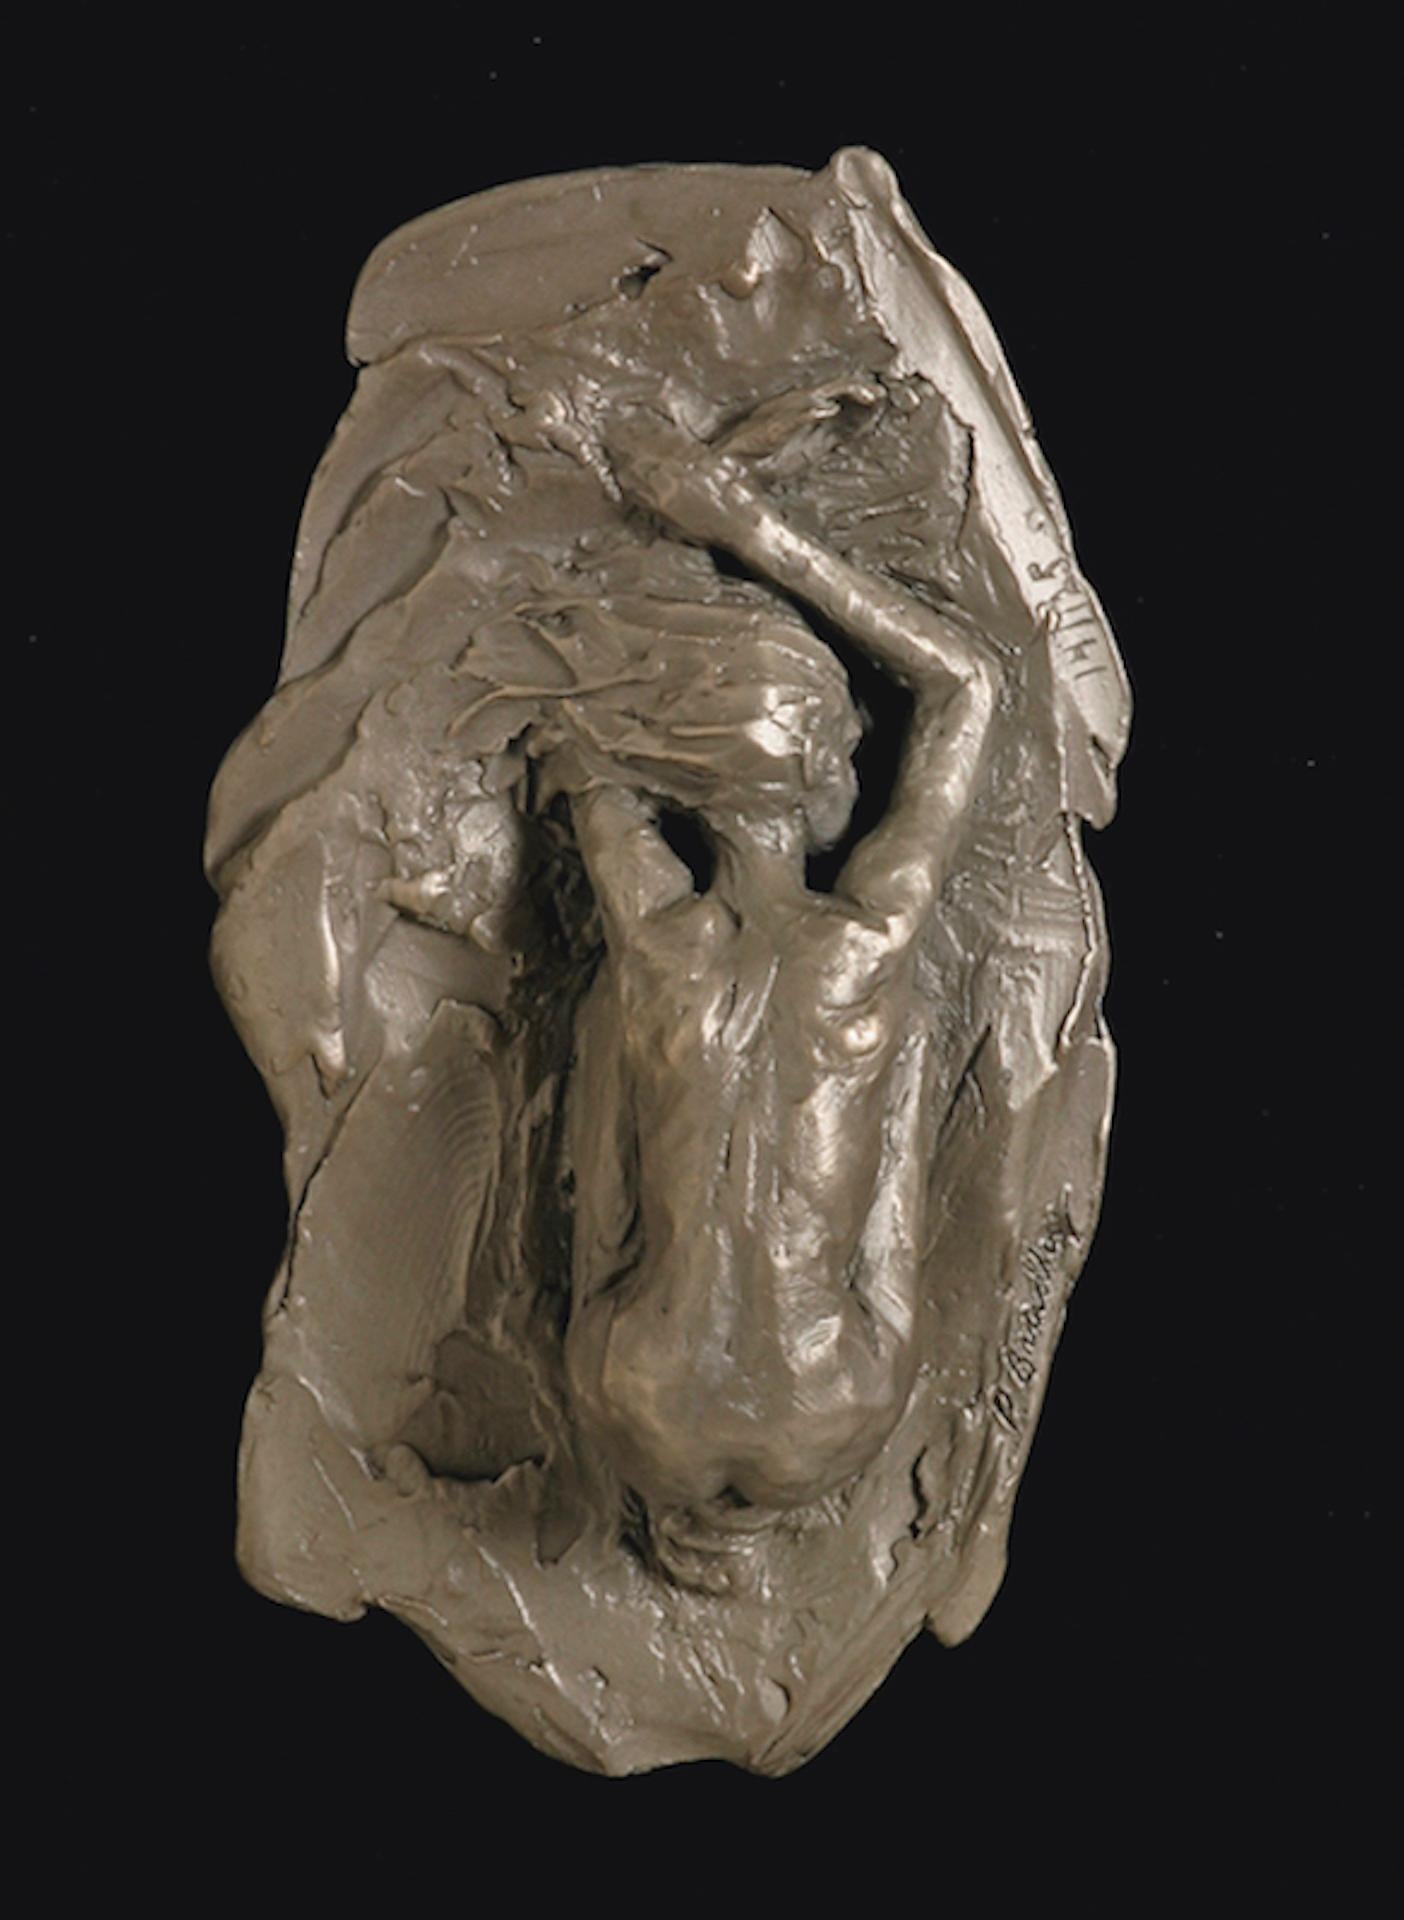 Paige Bradley Nude Sculpture - "Female Study III"